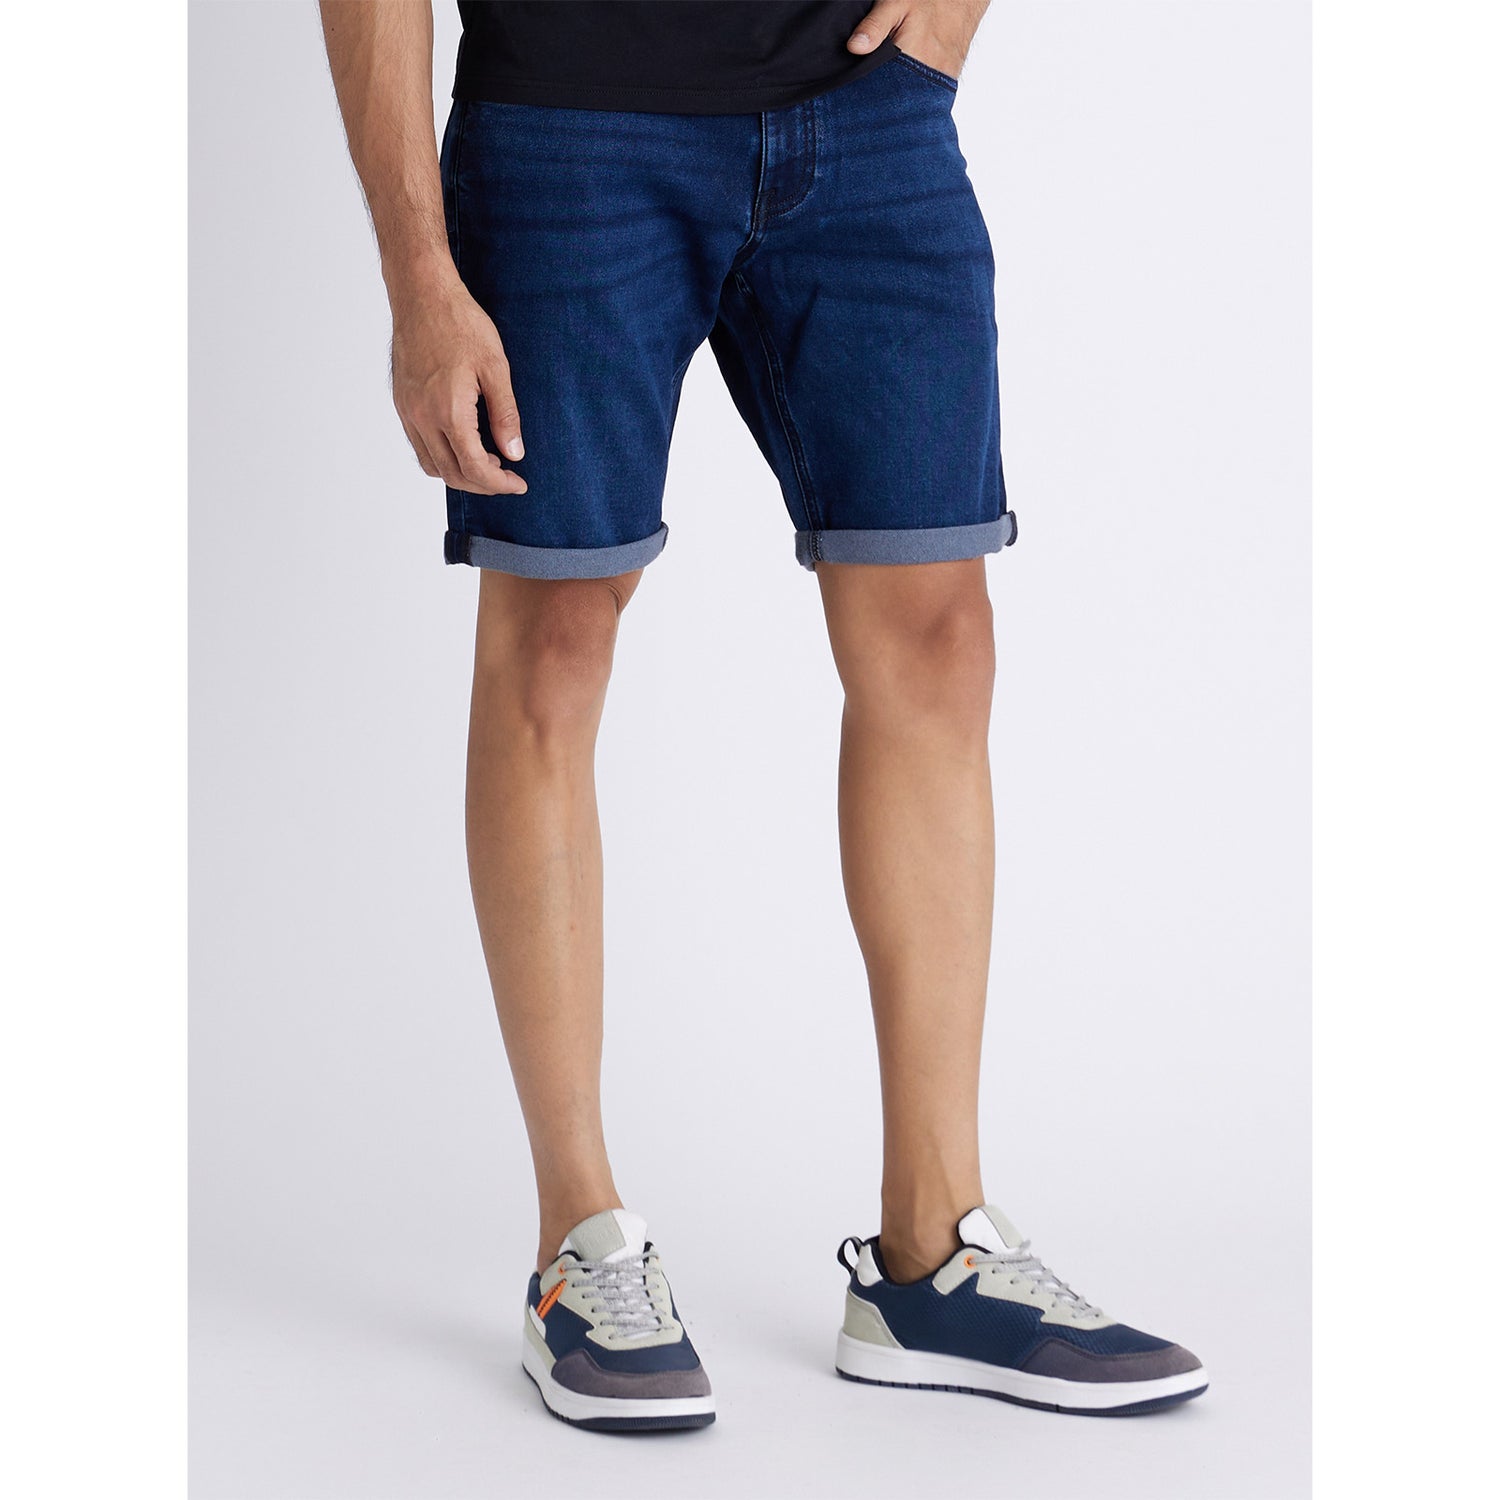 Men Solid Blue shorts (Various Sizes)